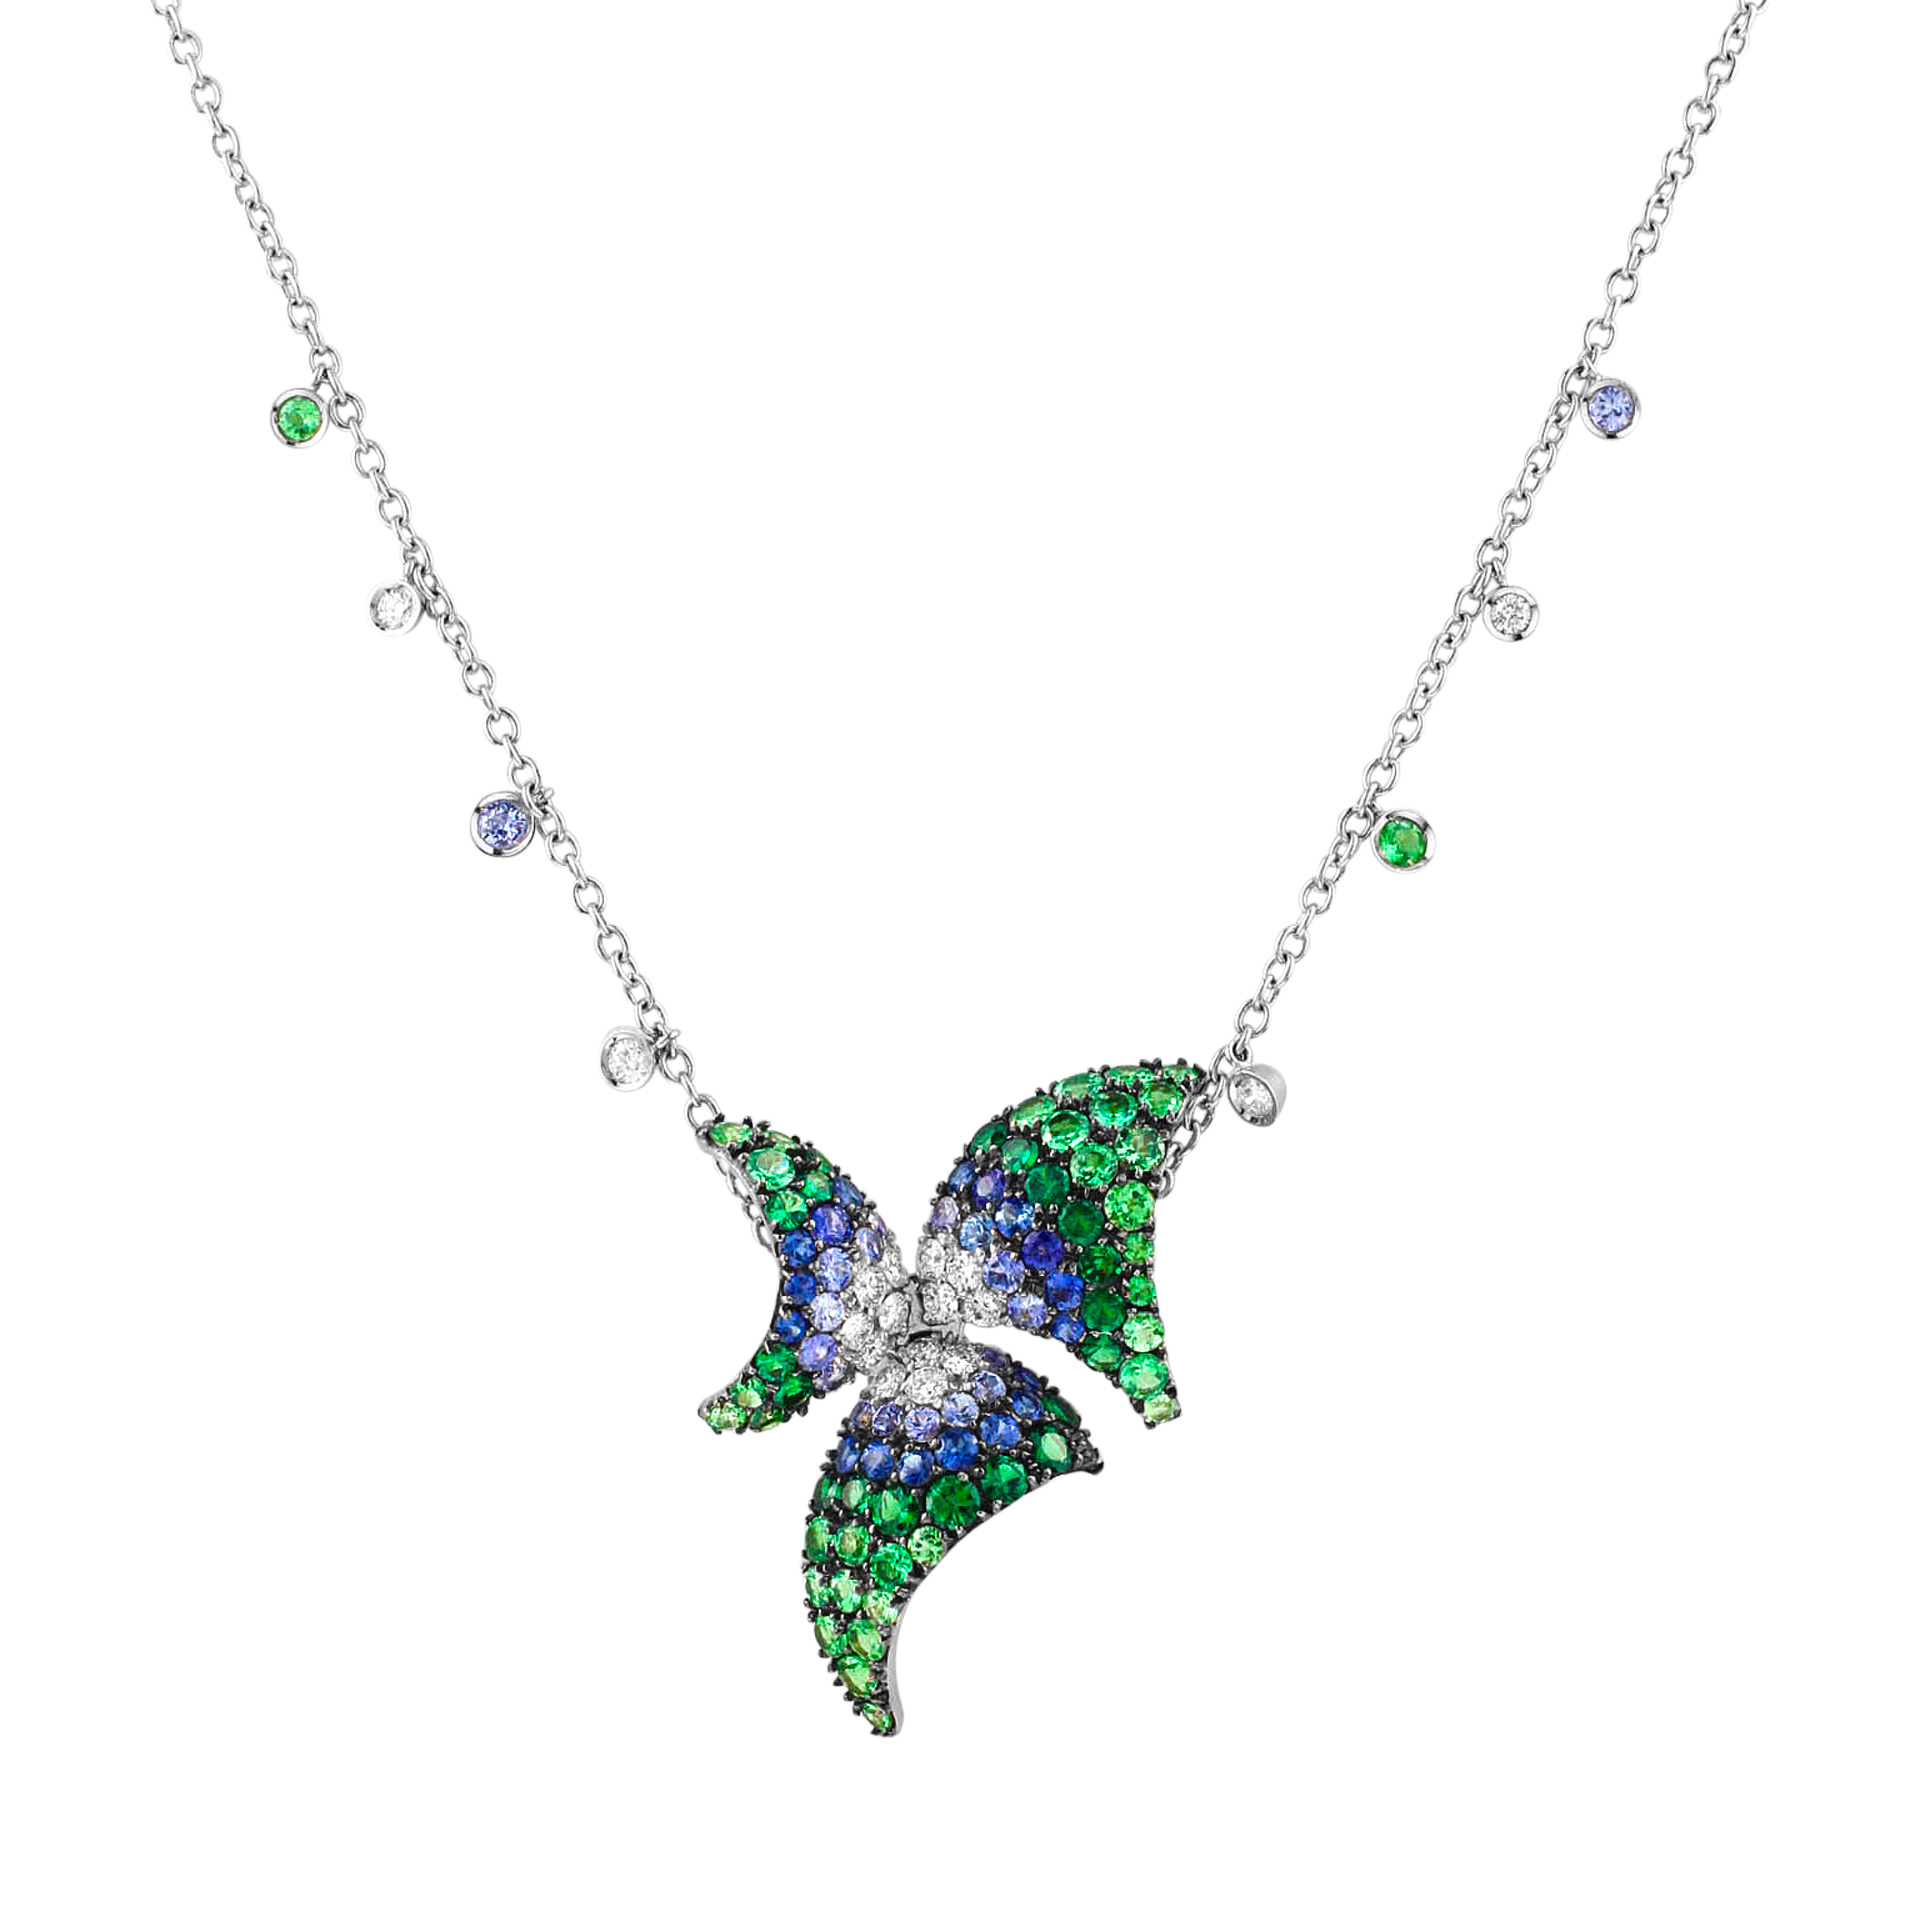 Stefan Hafner sapphire & diamond flower pendant necklace in 18k, 0.61 cts in dia & 1.50 cts in  sapp